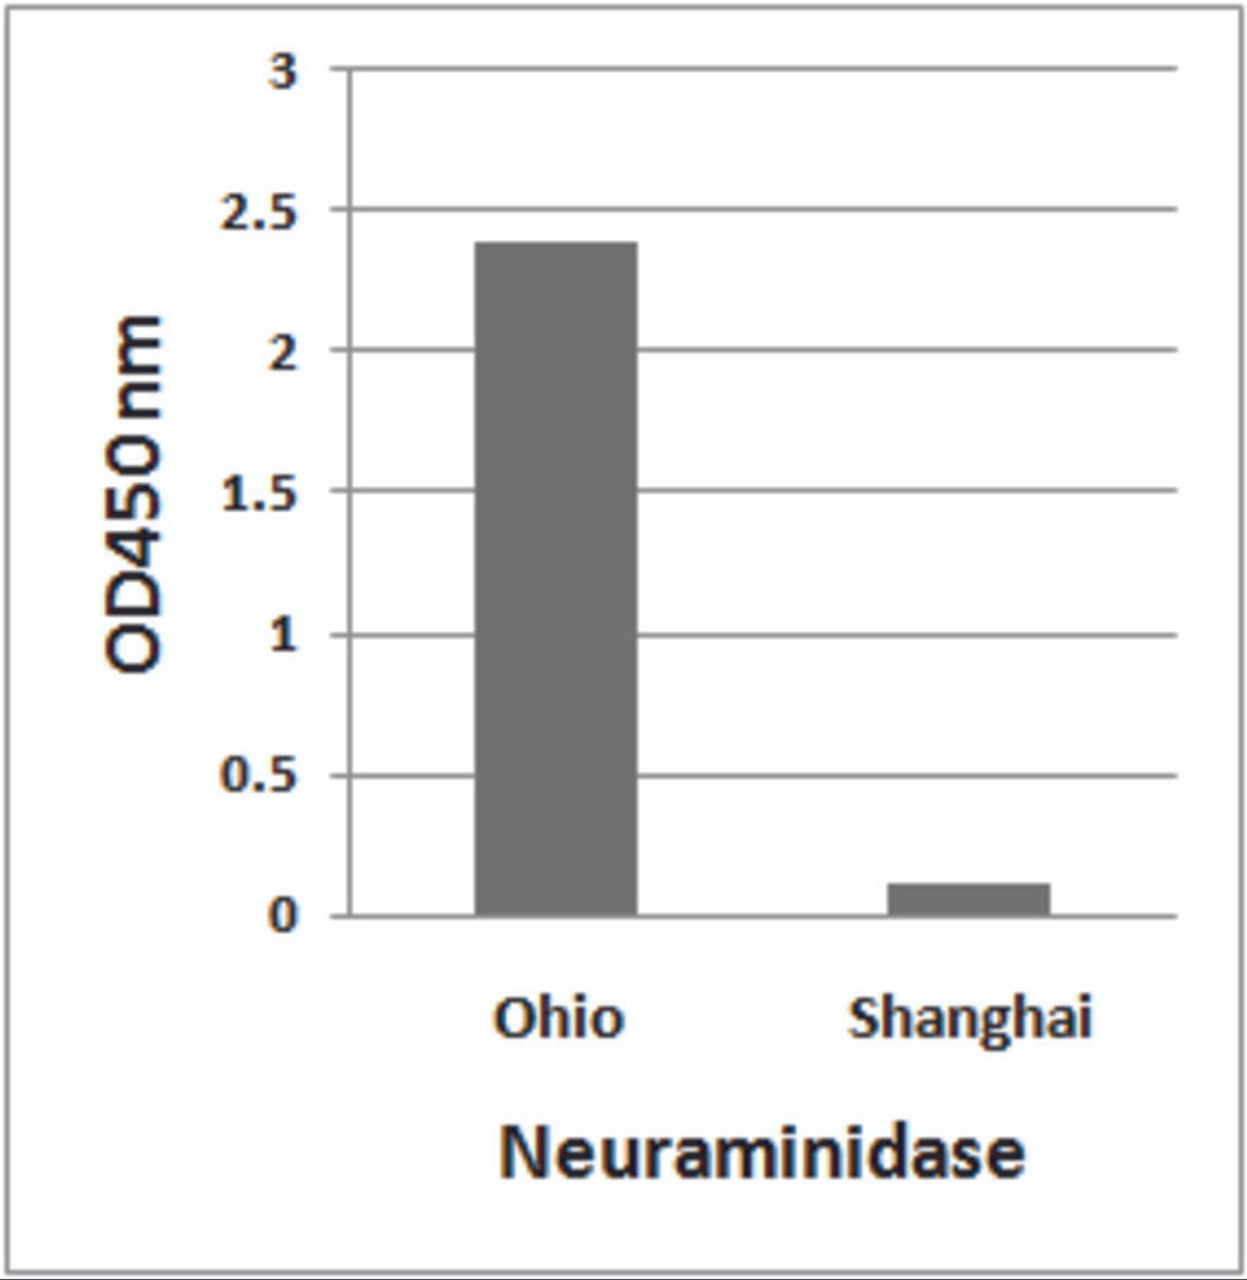 H7N9 Neuraminidase antibody (Cat. No. 7831 at 1 &#956;g/ml) detects 10 ng of H7N9 [Influenza A virus (A/blue-winged teal/Ohio/566/2006 (H7N9) ) ] Neuraminidase peptide, and not 10 ng of H7N9 [Influenza A virus (A/Shanghai/02/2013 (H7N9) ) ] Neuraminidase peptide in ELISA.